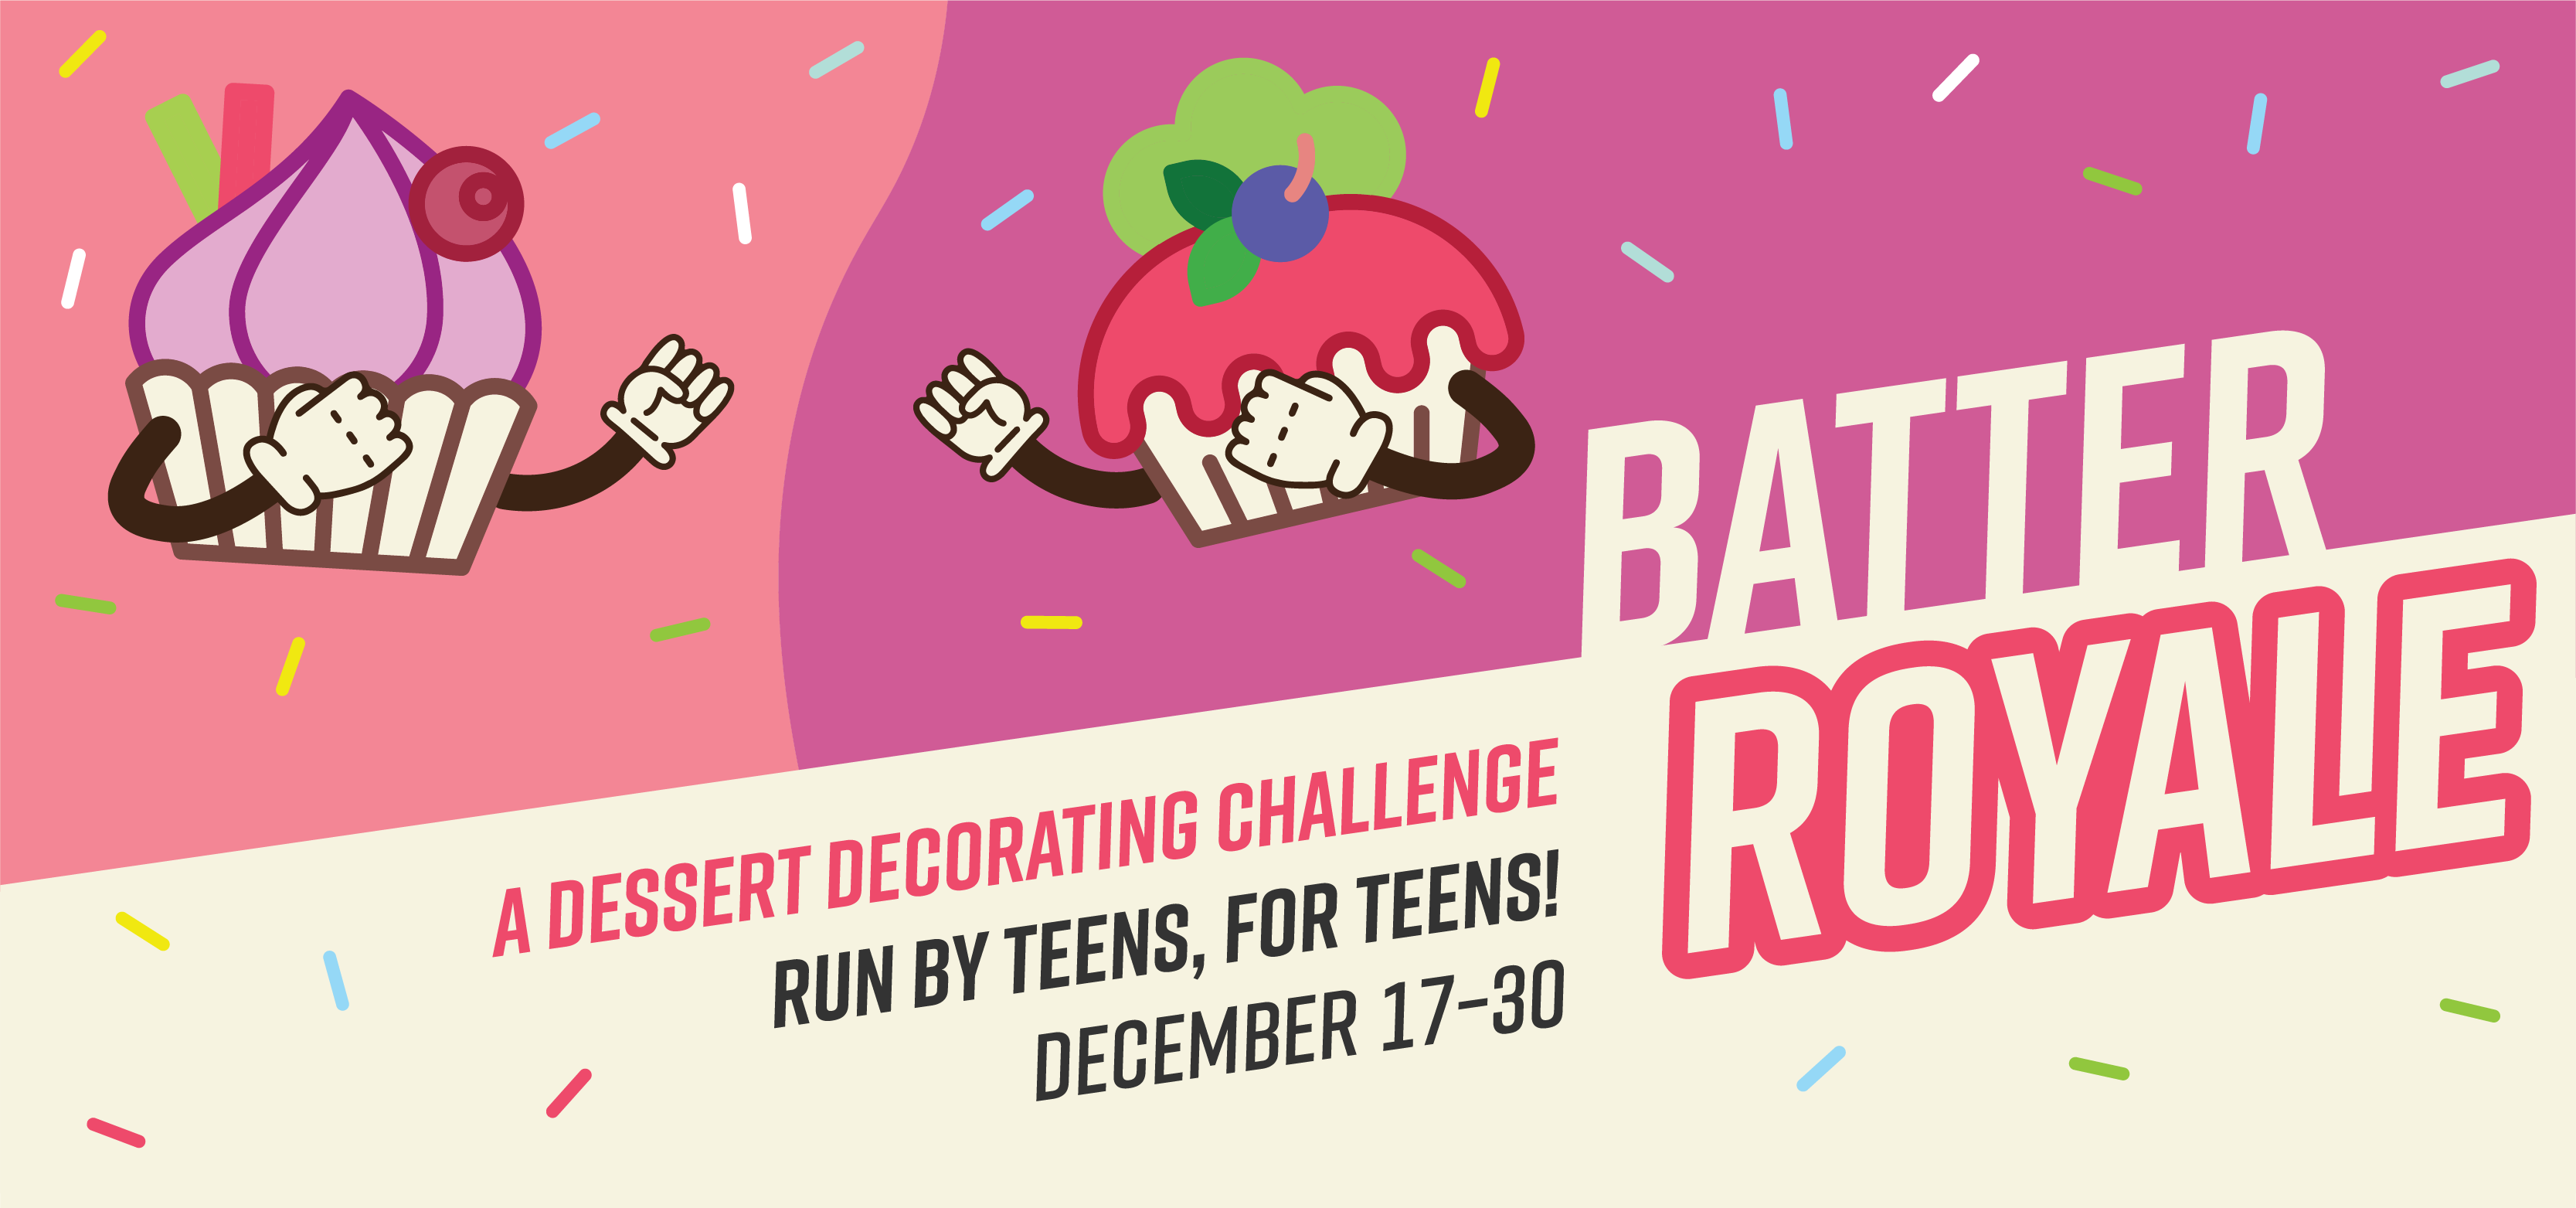 Batter Royale dessert decorating challenge - run by teens, for teens! December 17-30